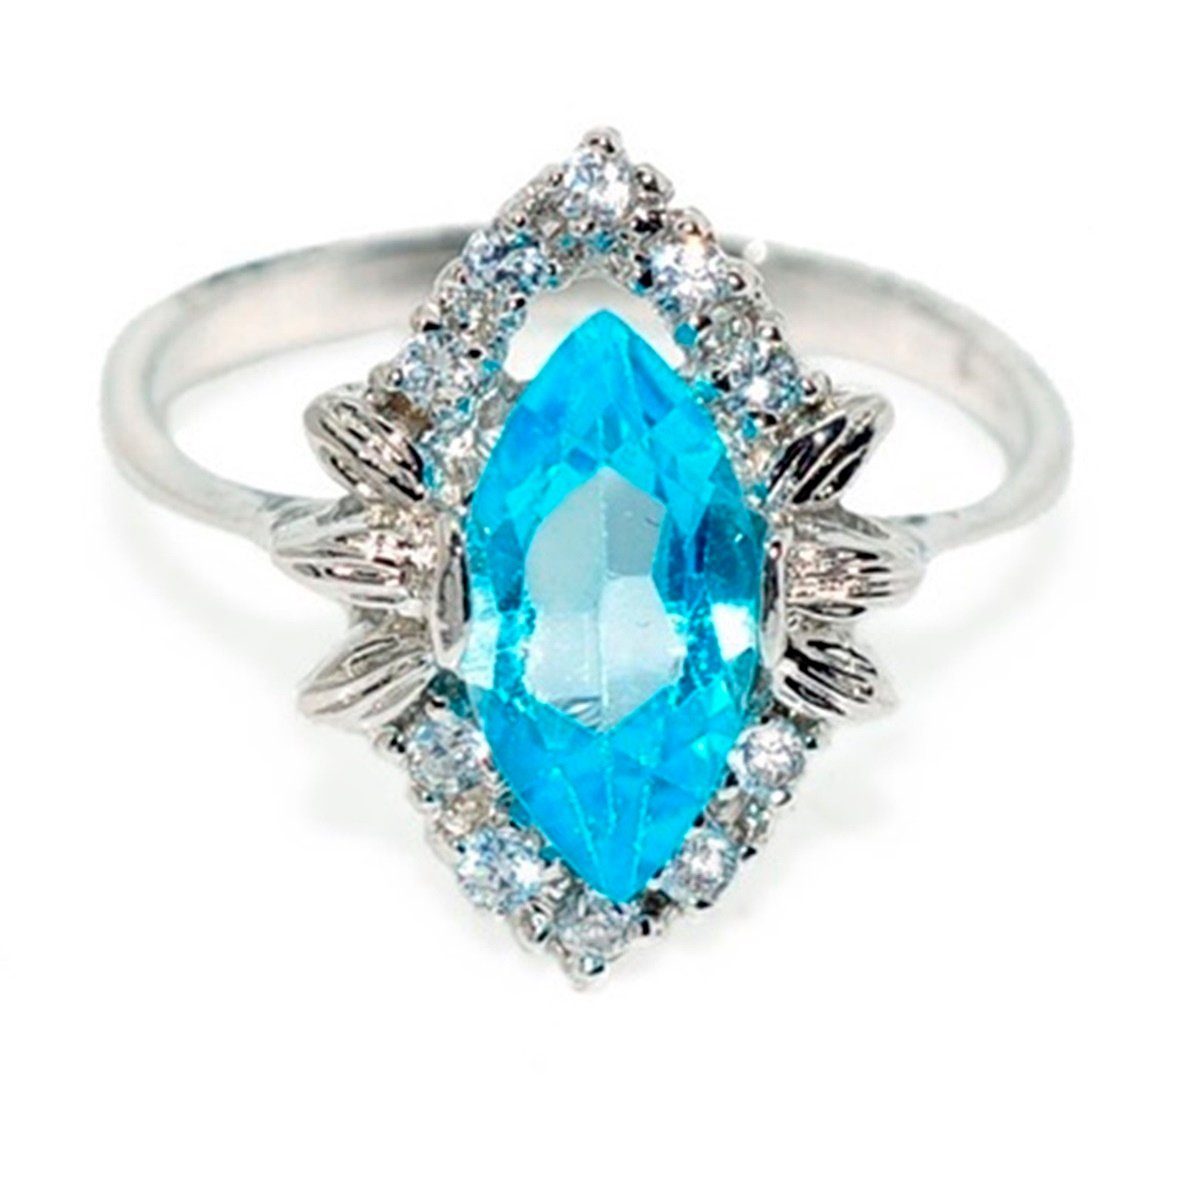 Damen Schmuck Goldene Hufeisen Silberring Swiss Blautopas Ring aus 925 Sterlingsilber Damen echte Edelsteine Fingerring, Einzels